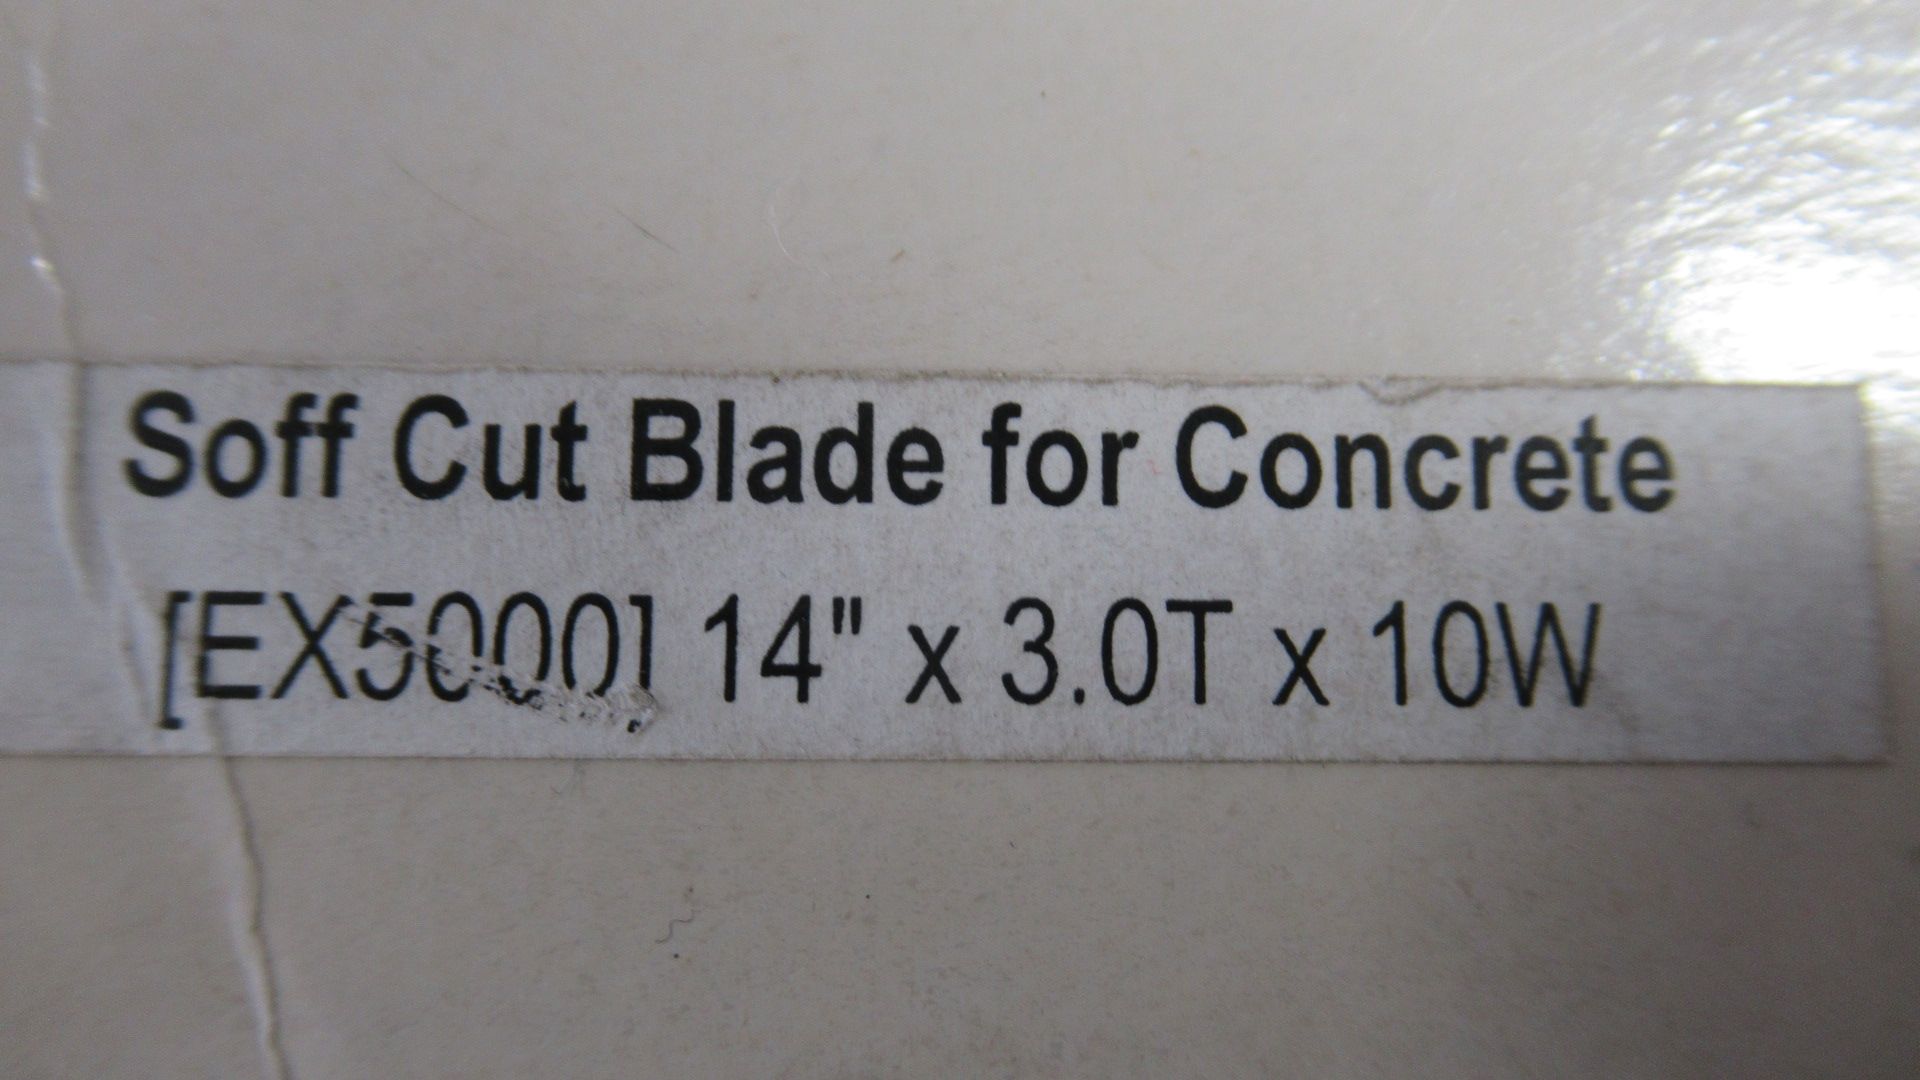 14" SOFT CUT BLADE FOR CONCRETE, 14" X 3.0T X 10W (12),1-3/4" DIA. BORE - Image 2 of 2